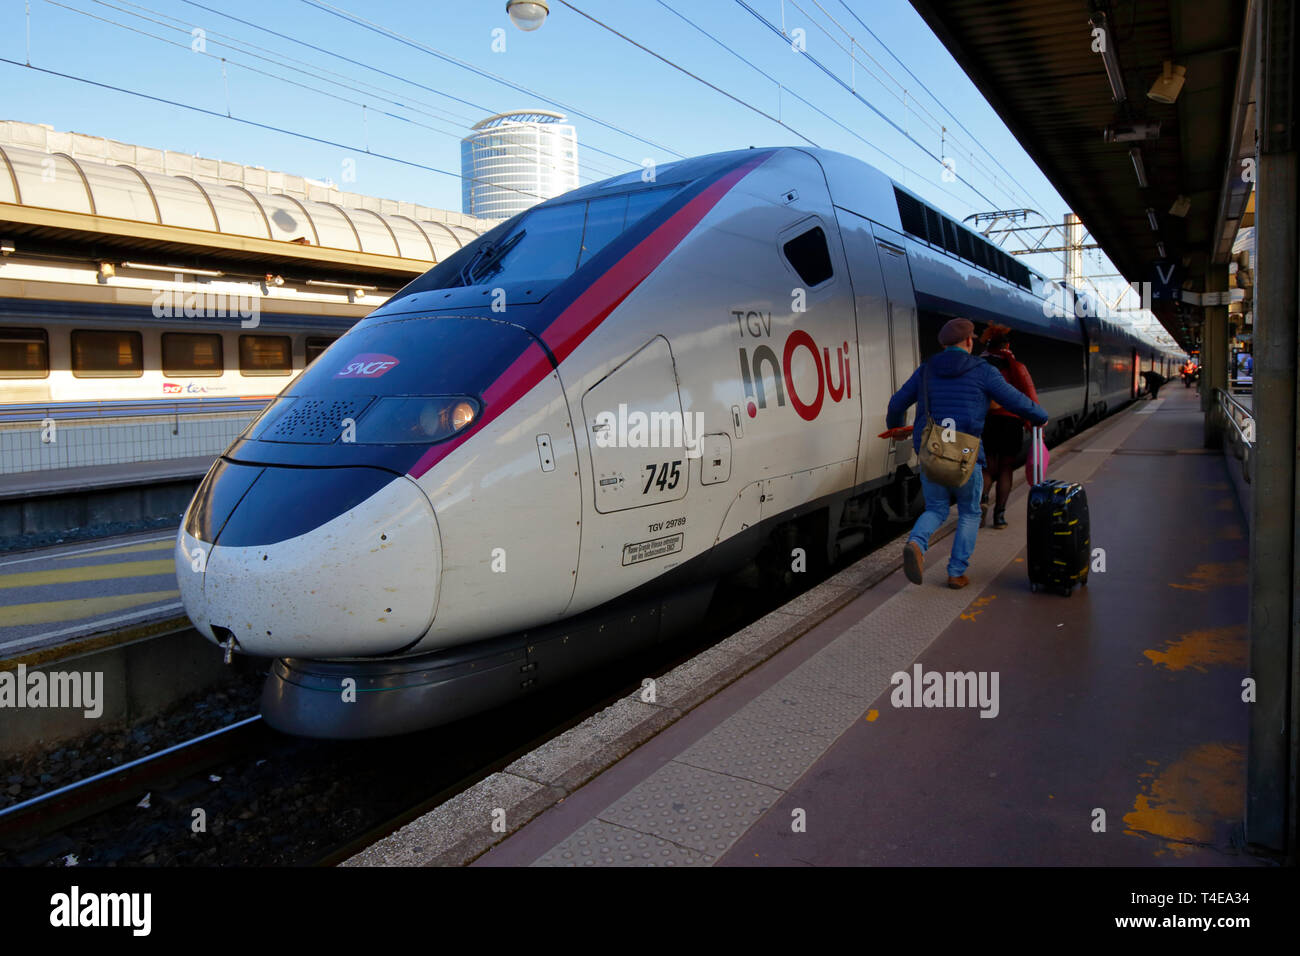 People running to catch the train, a TGV inOui high speed express train Stock Photo